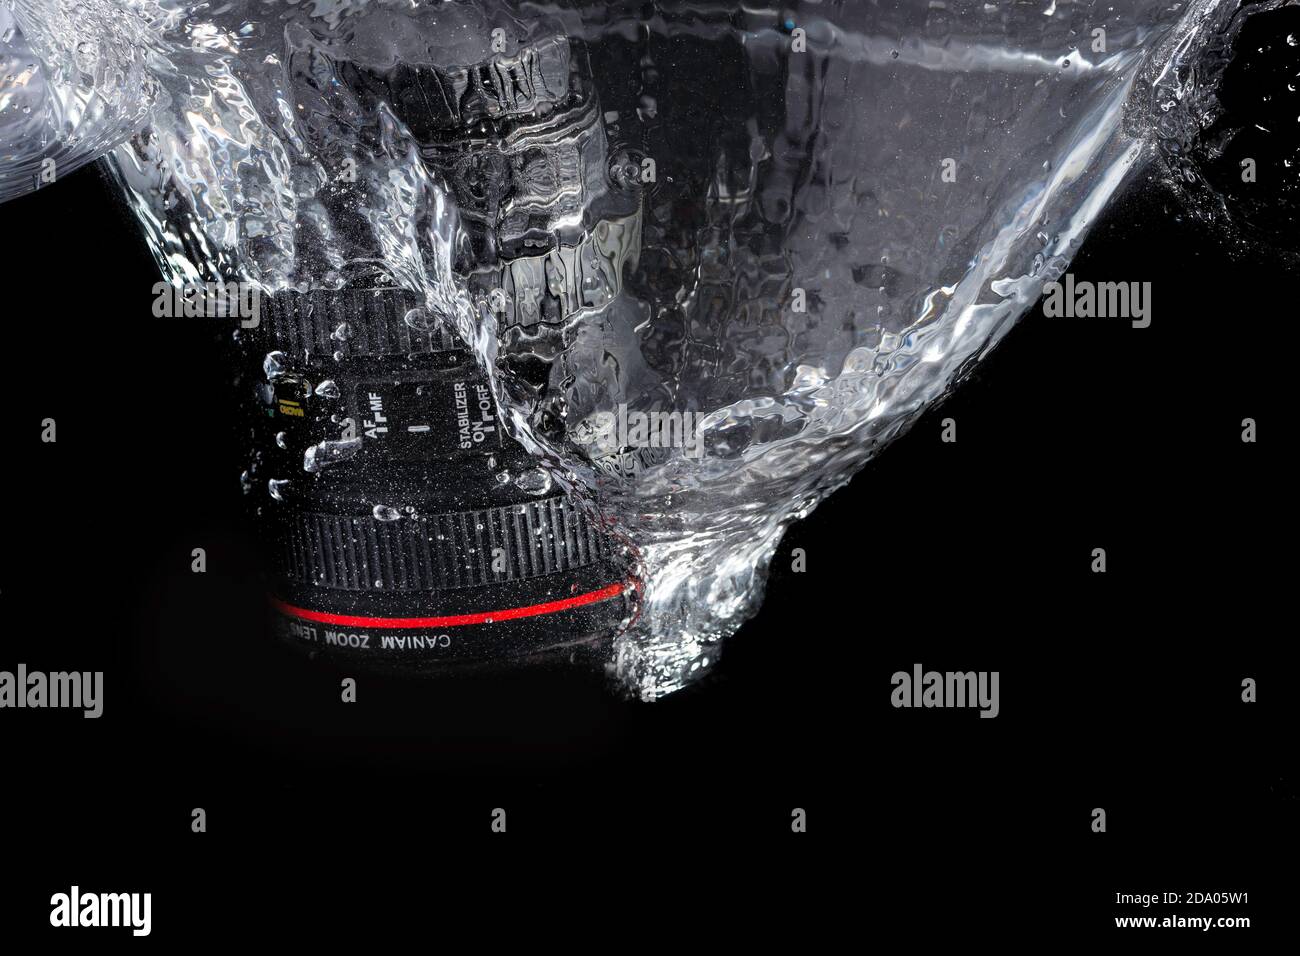 DSLR camera lens splashing into  water on a black background Stock Photo